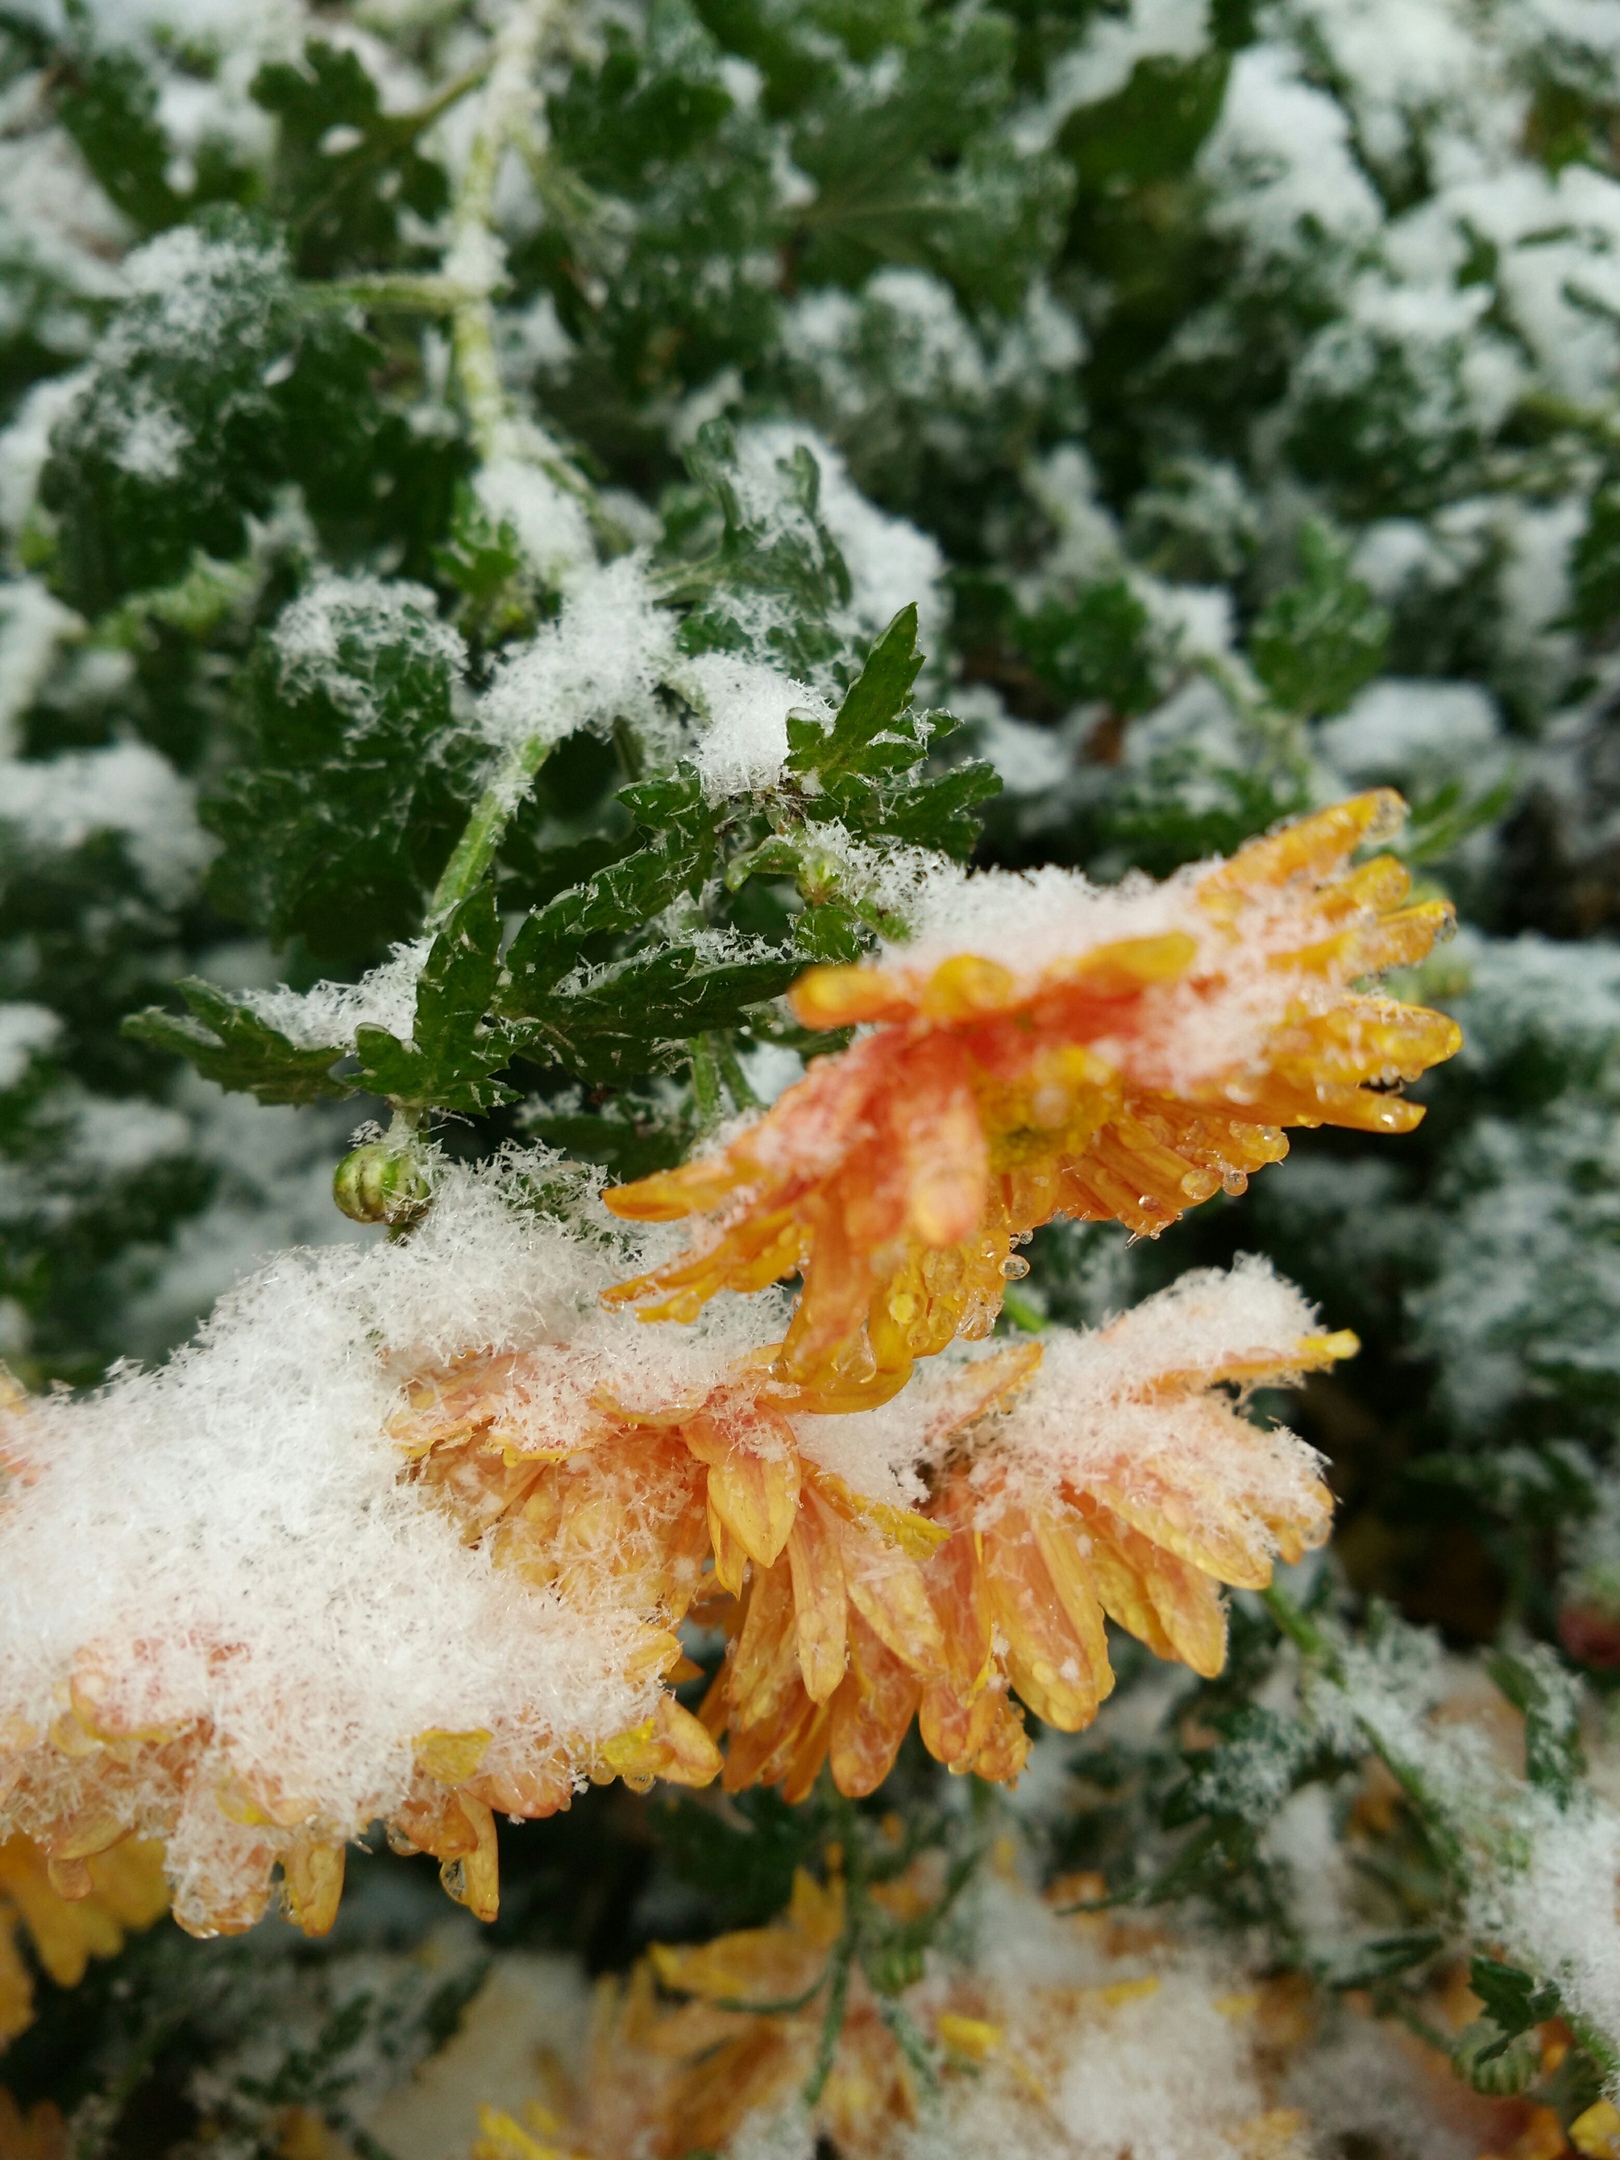 Хризантема снега россии фото